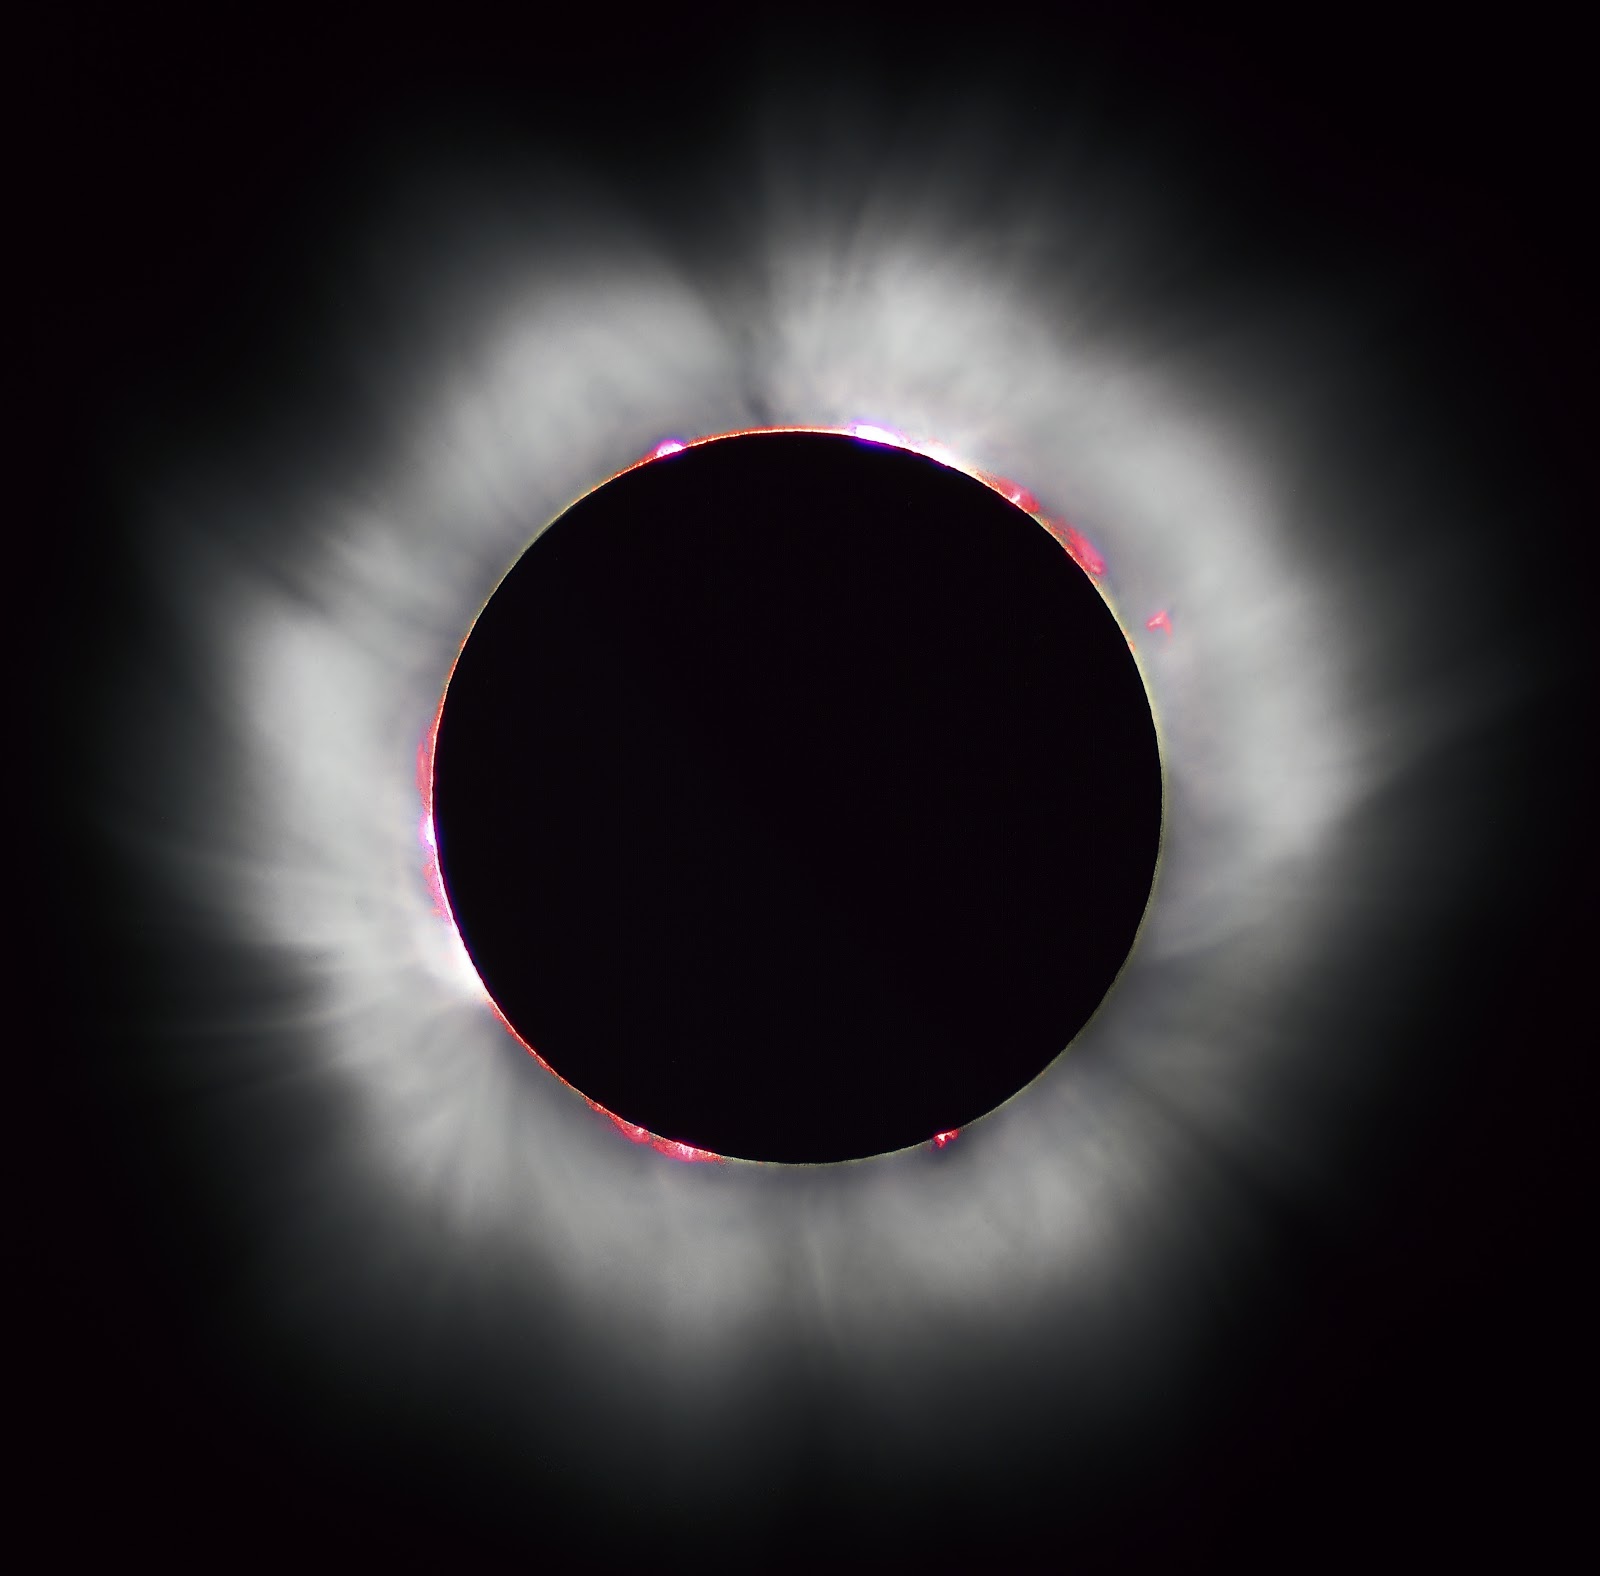 https://upload.wikimedia.org/wikipedia/commons/1/1c/Solar_eclipse_1999_4_NR.jpg